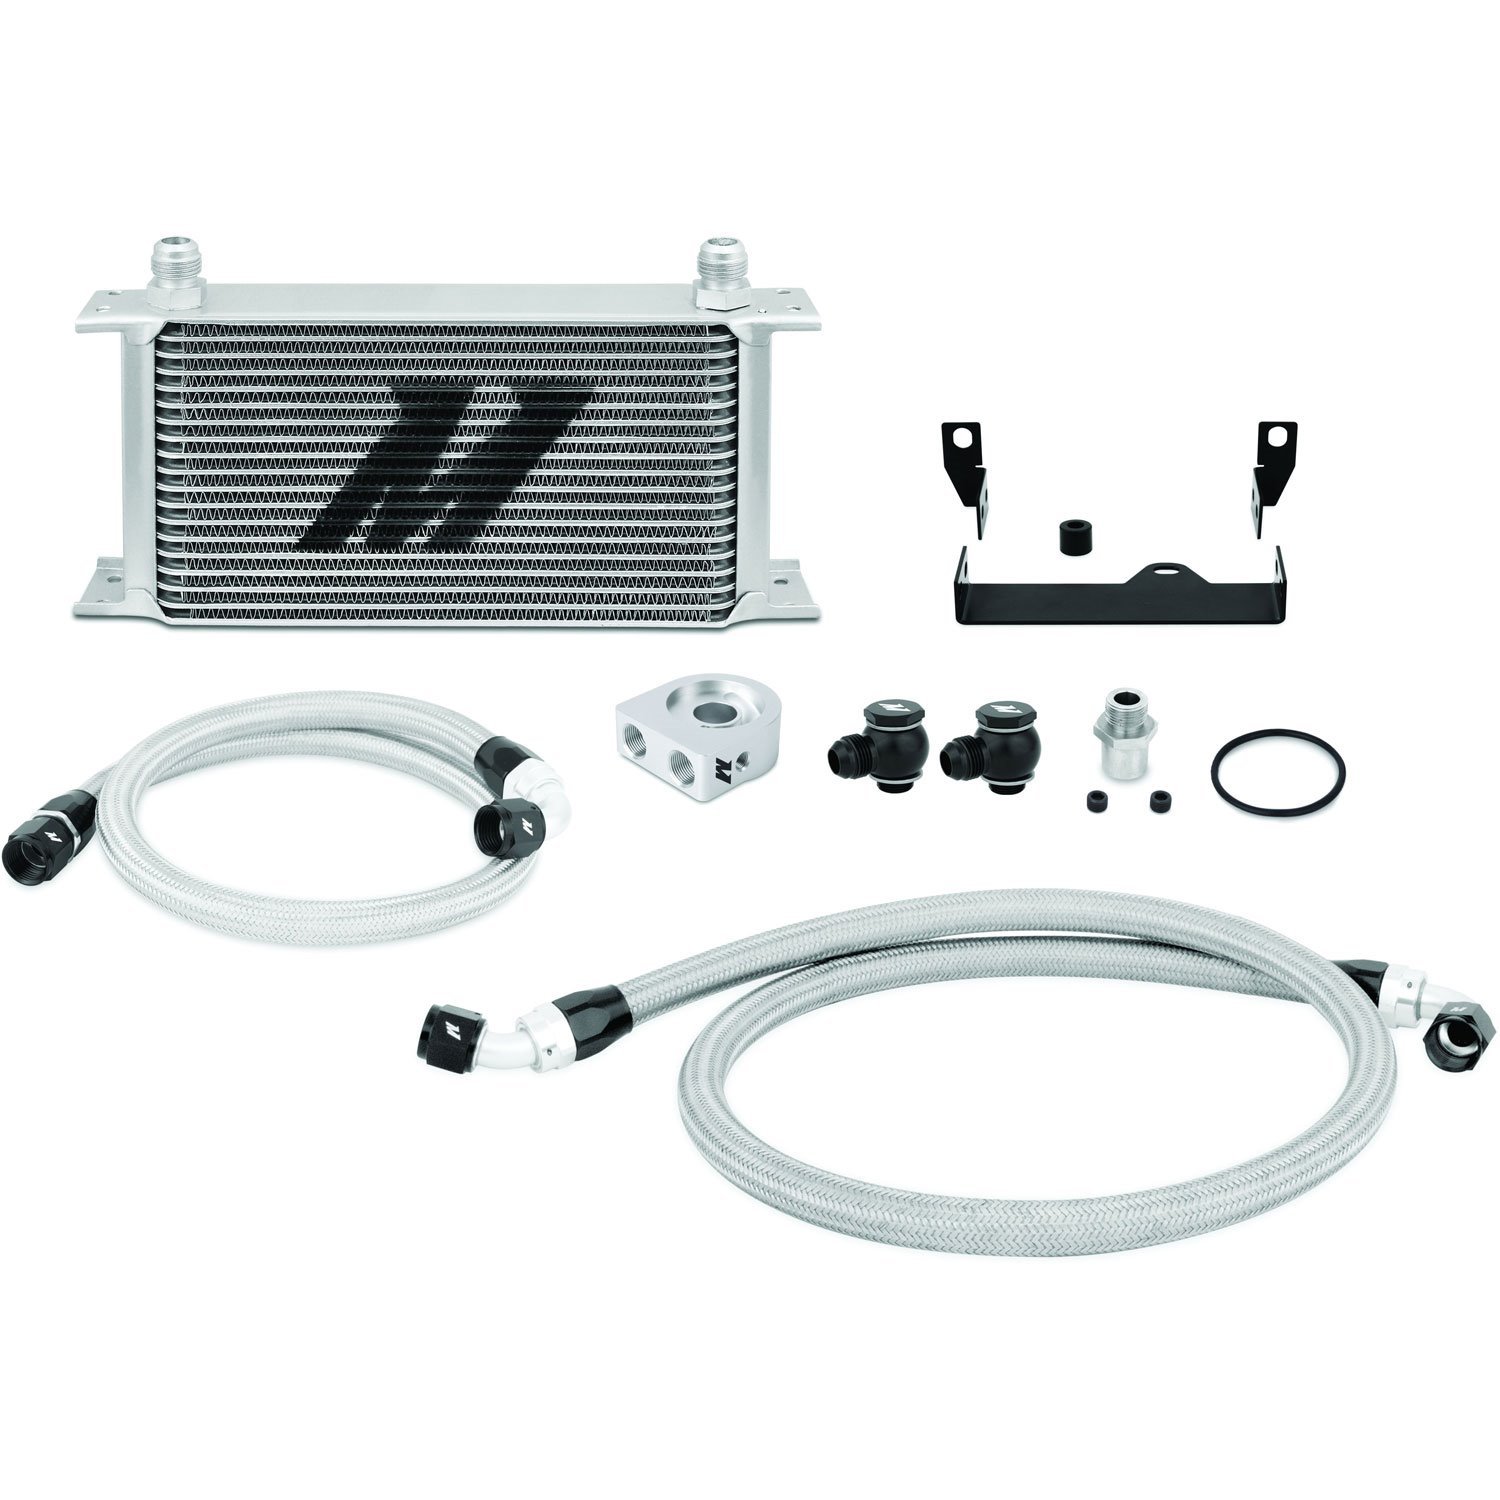 Subaru WRX/STi Oil Cooler Kit - MFG Part No. MMOC-WRX-06